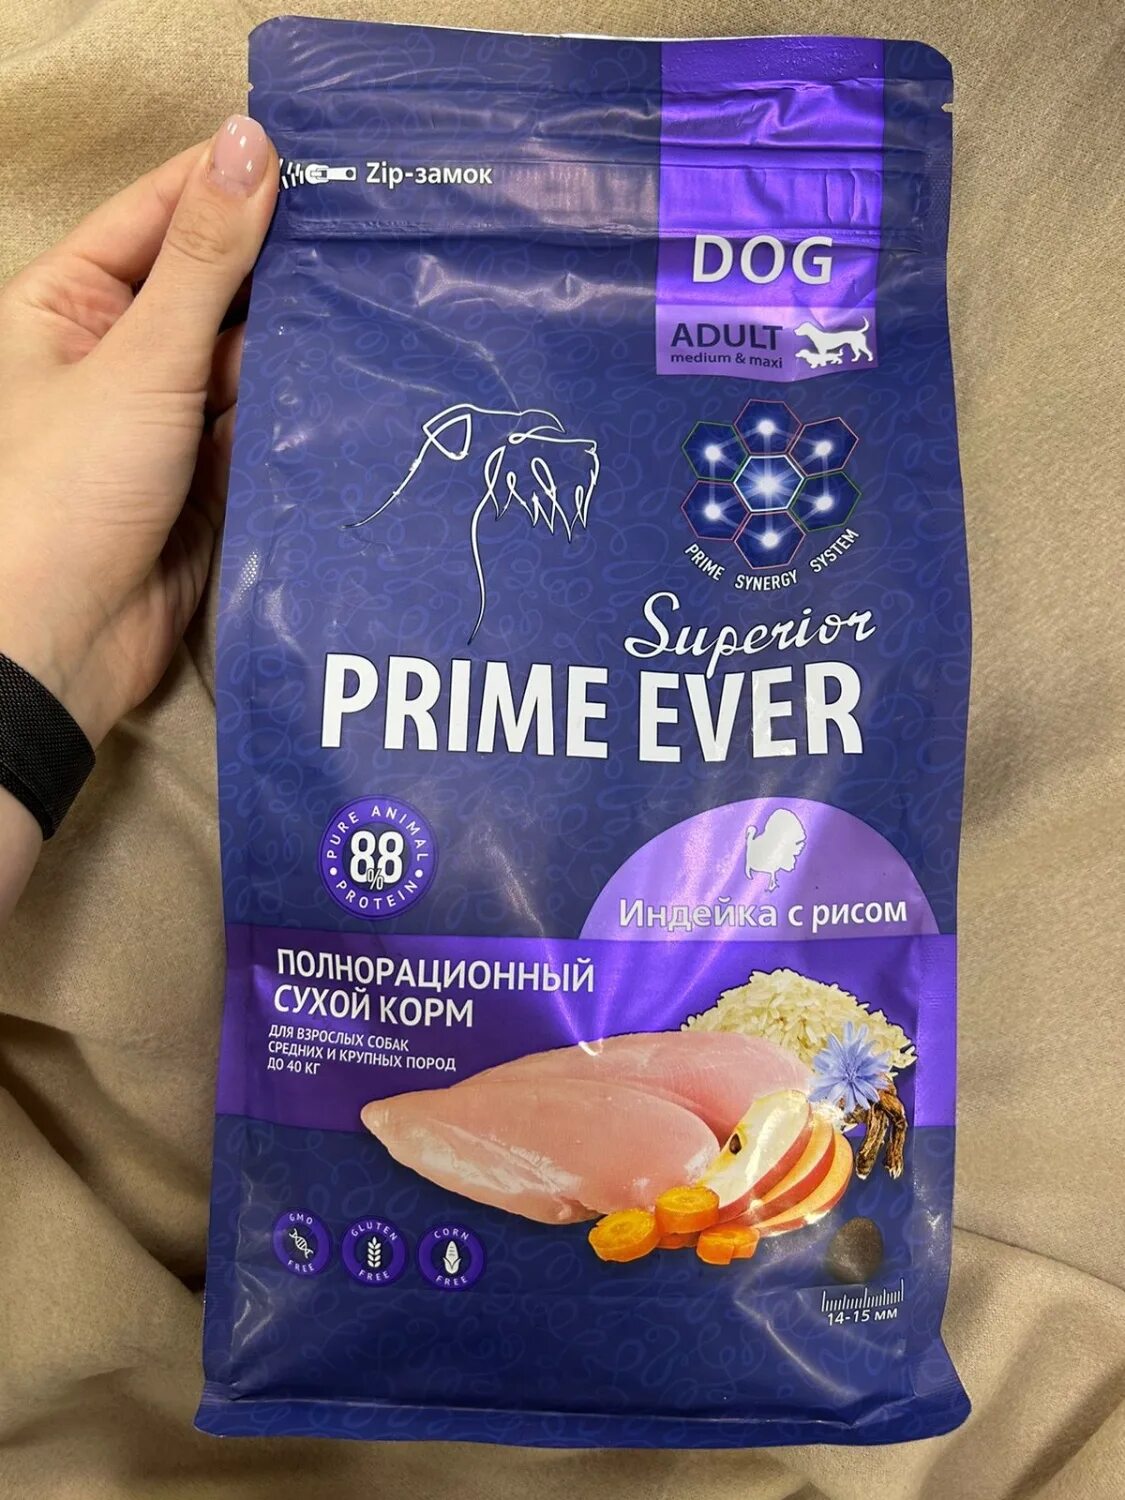 Prime корм для собак. Prime ever Superior. Корм для собак Prime. Prime ever сухой корм для собак. Корм для собак Прайм Эвер отзывы.